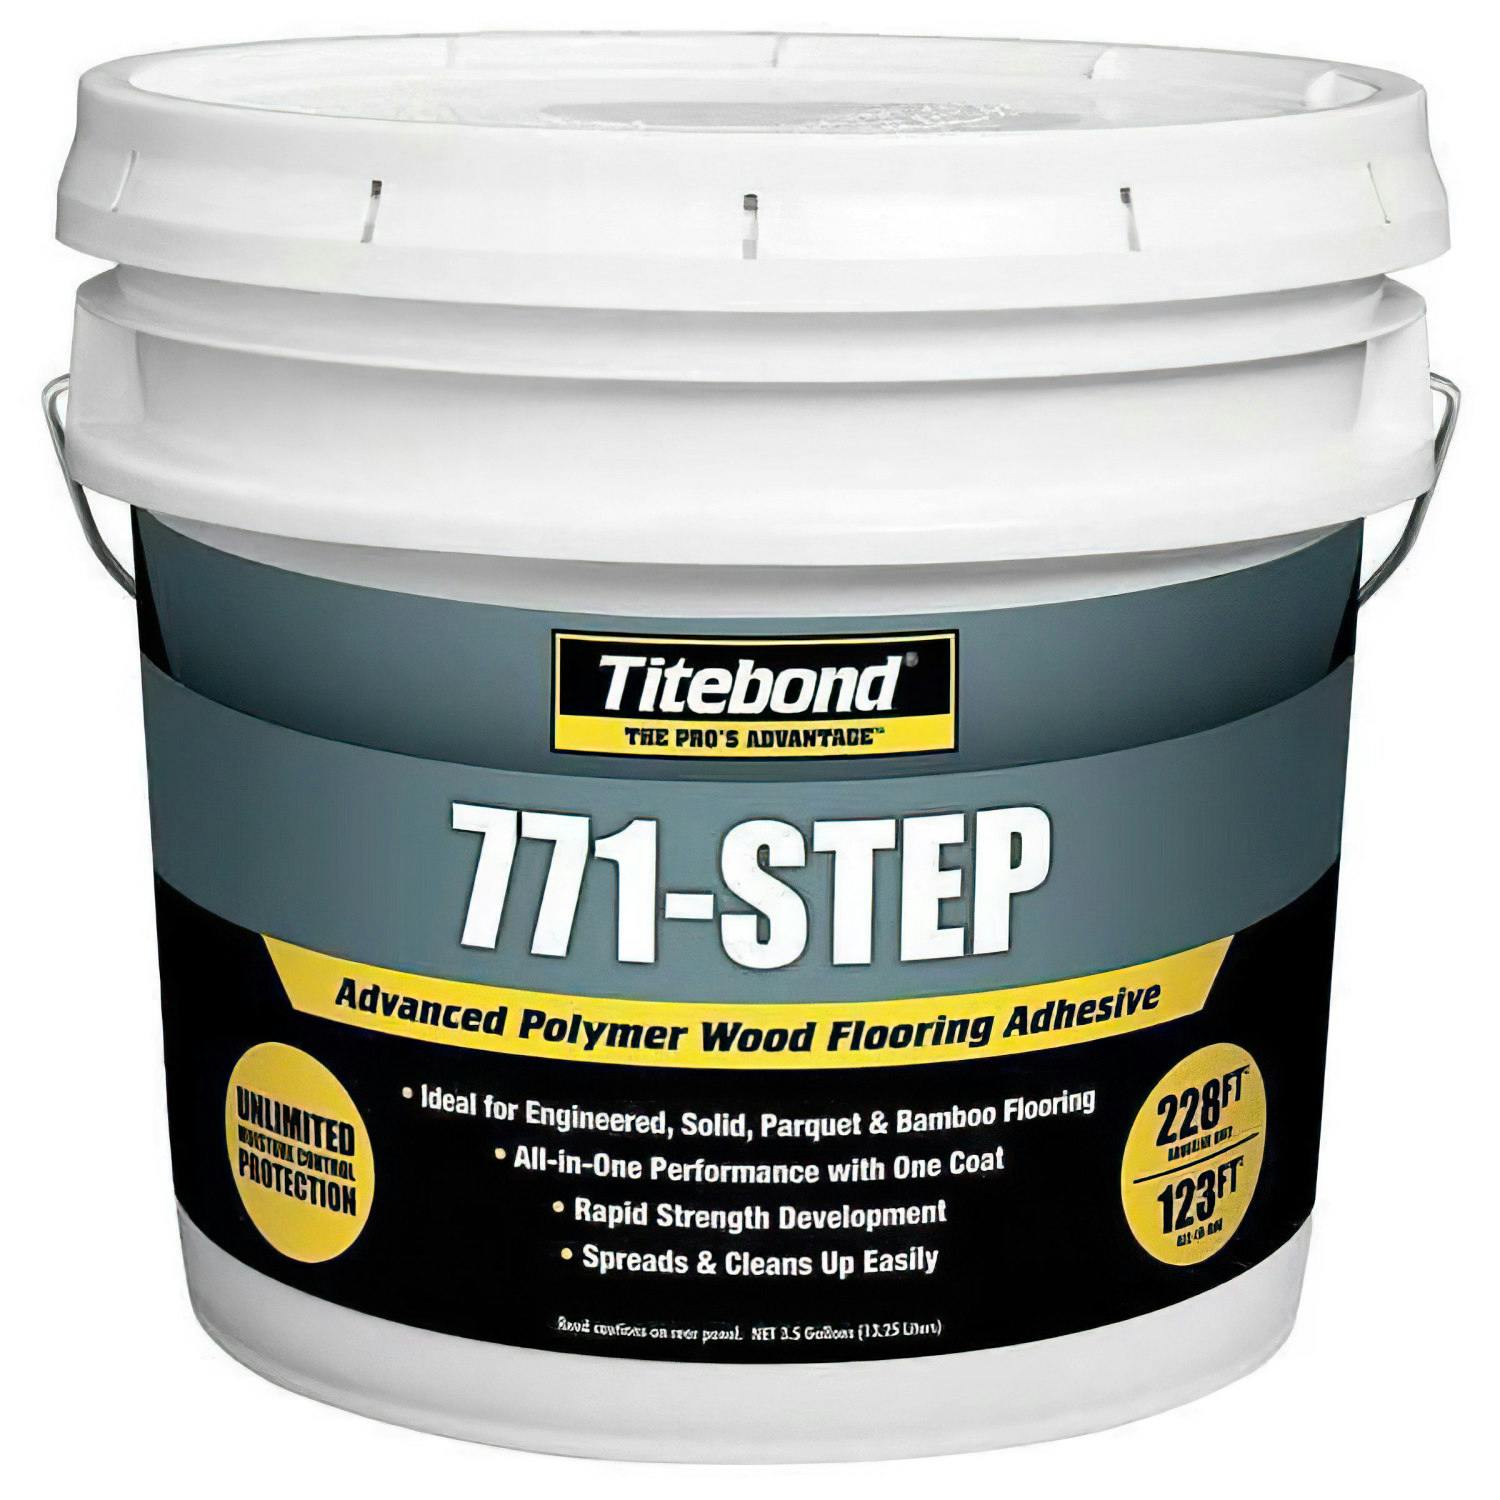 Titebond 771-Step Adhesive and Moisture Control (3 Gallon)